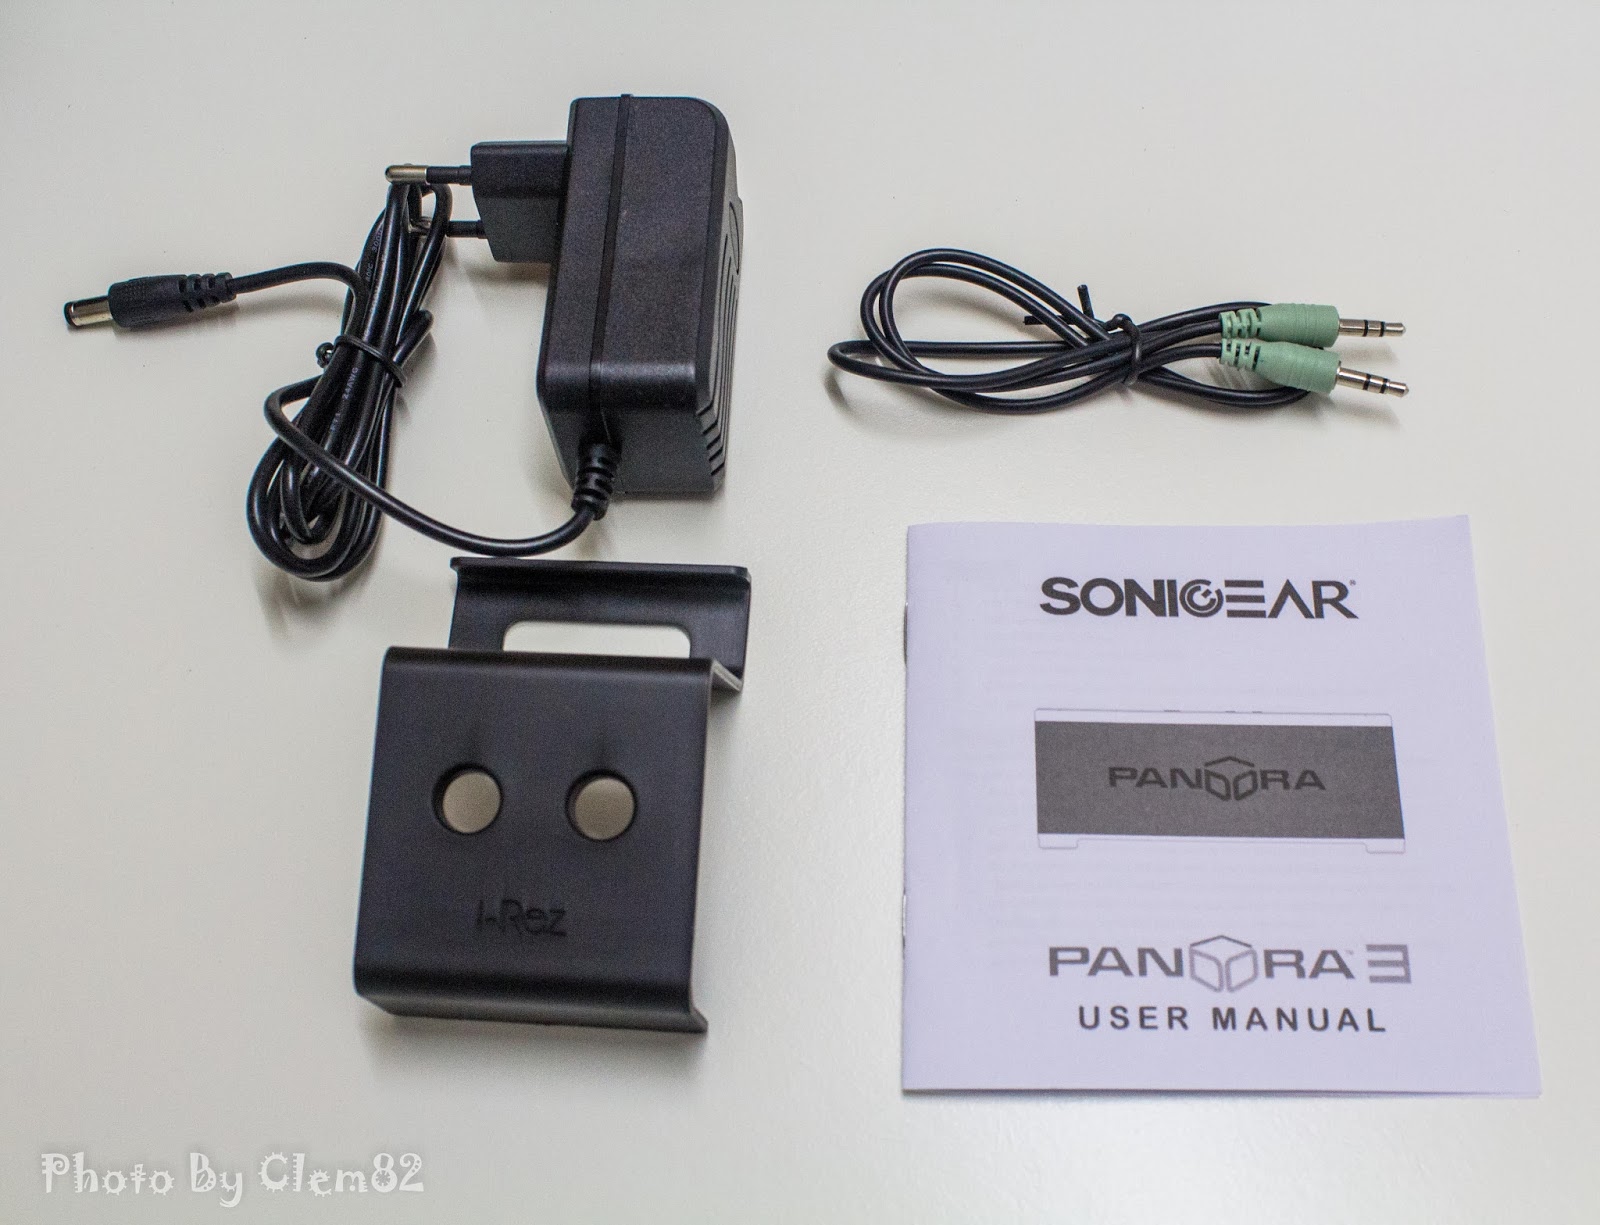 Opening Pandora's Box: SonicGear Pandora Wireless Bluetooth Media Player Series 84